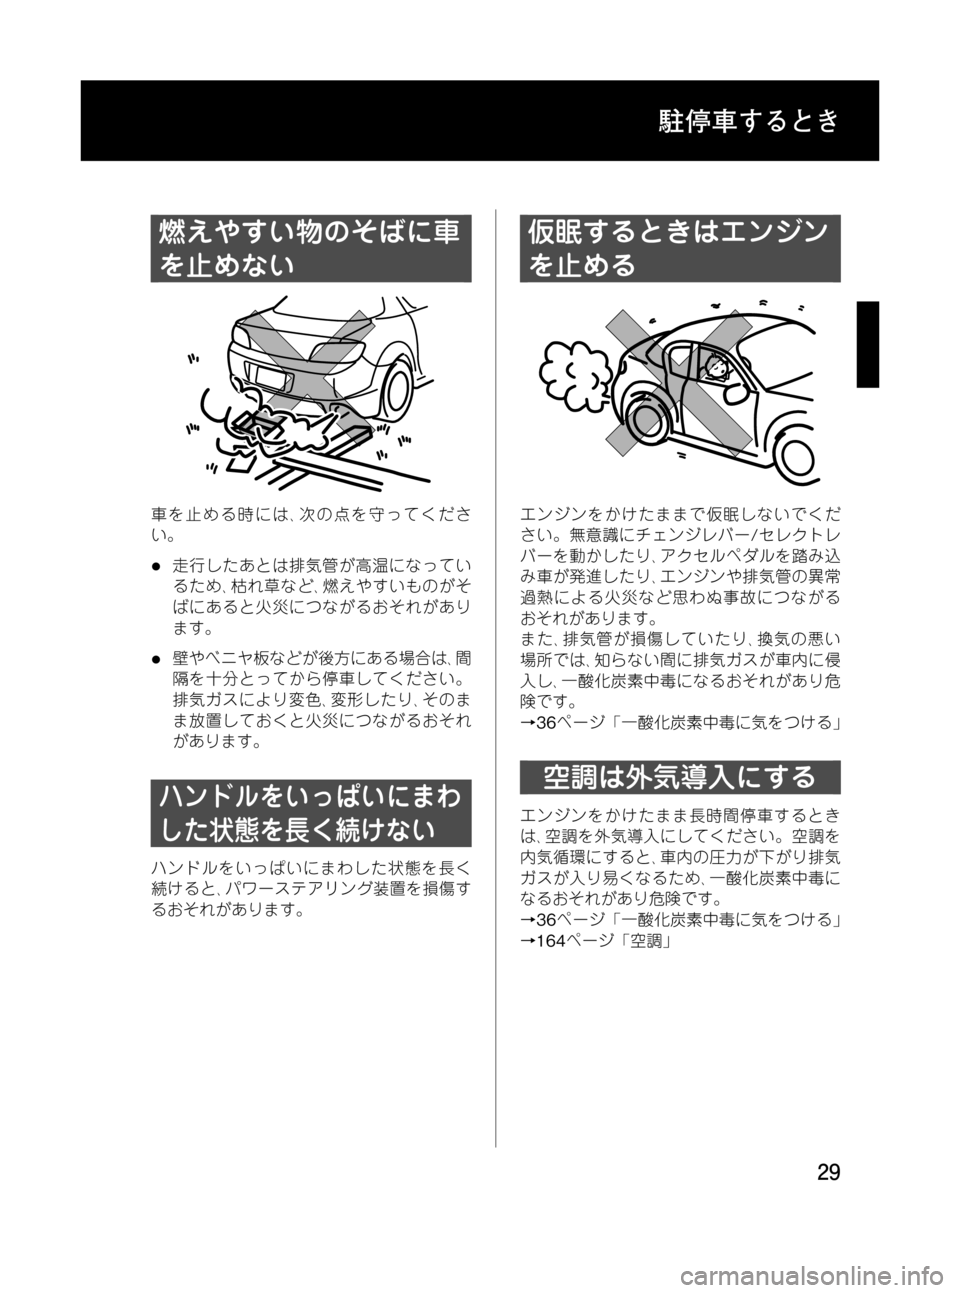 MAZDA MODEL RX 8 2008  取扱説明書 (in Japanese) Black plate (29,1)
燃えやすい物のそばに車
を止めない
車を止める時には､次の点を守ってくださ
い。
l走行したあとは排気管が高温になってい
るため�